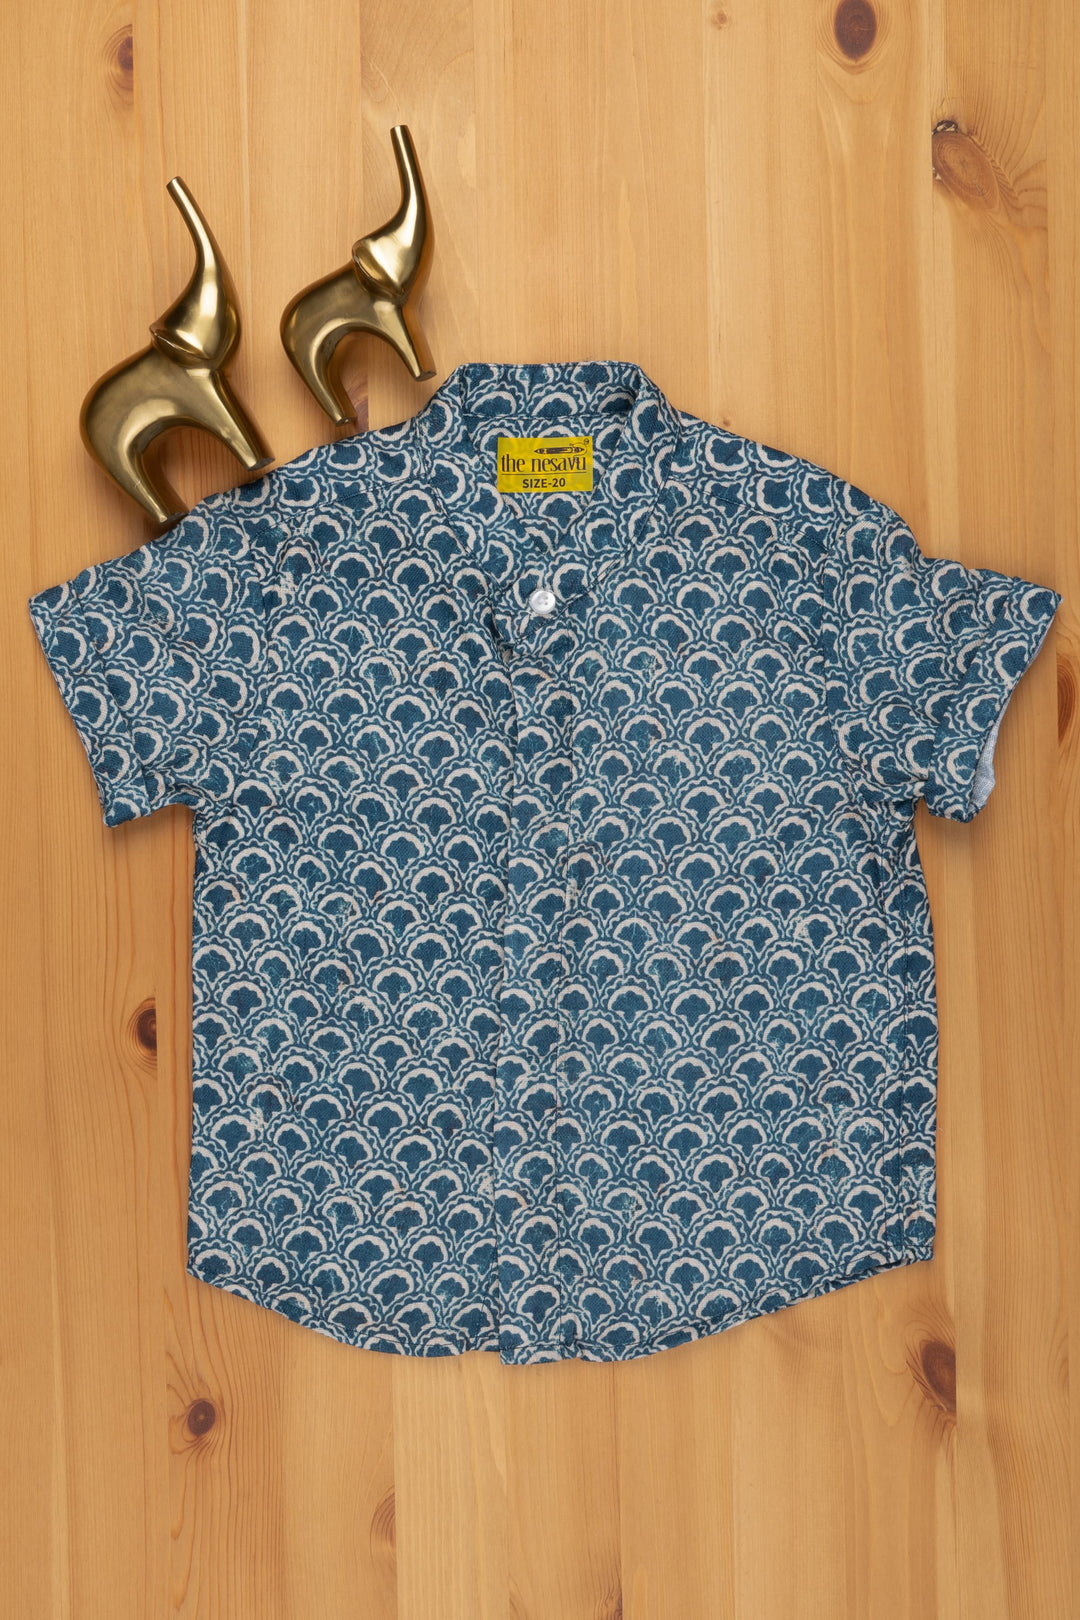 The Nesavu Boys Linen Shirt Vintage Indigo: Linen Boys' Shirt with Retro-Inspired Prints for a Nostalgic Feel Nesavu 14 (6M) / Blue / Linen BS061 Retro-Inspired Printed Shirt | Casual Shirt for Boys | The Nesavu